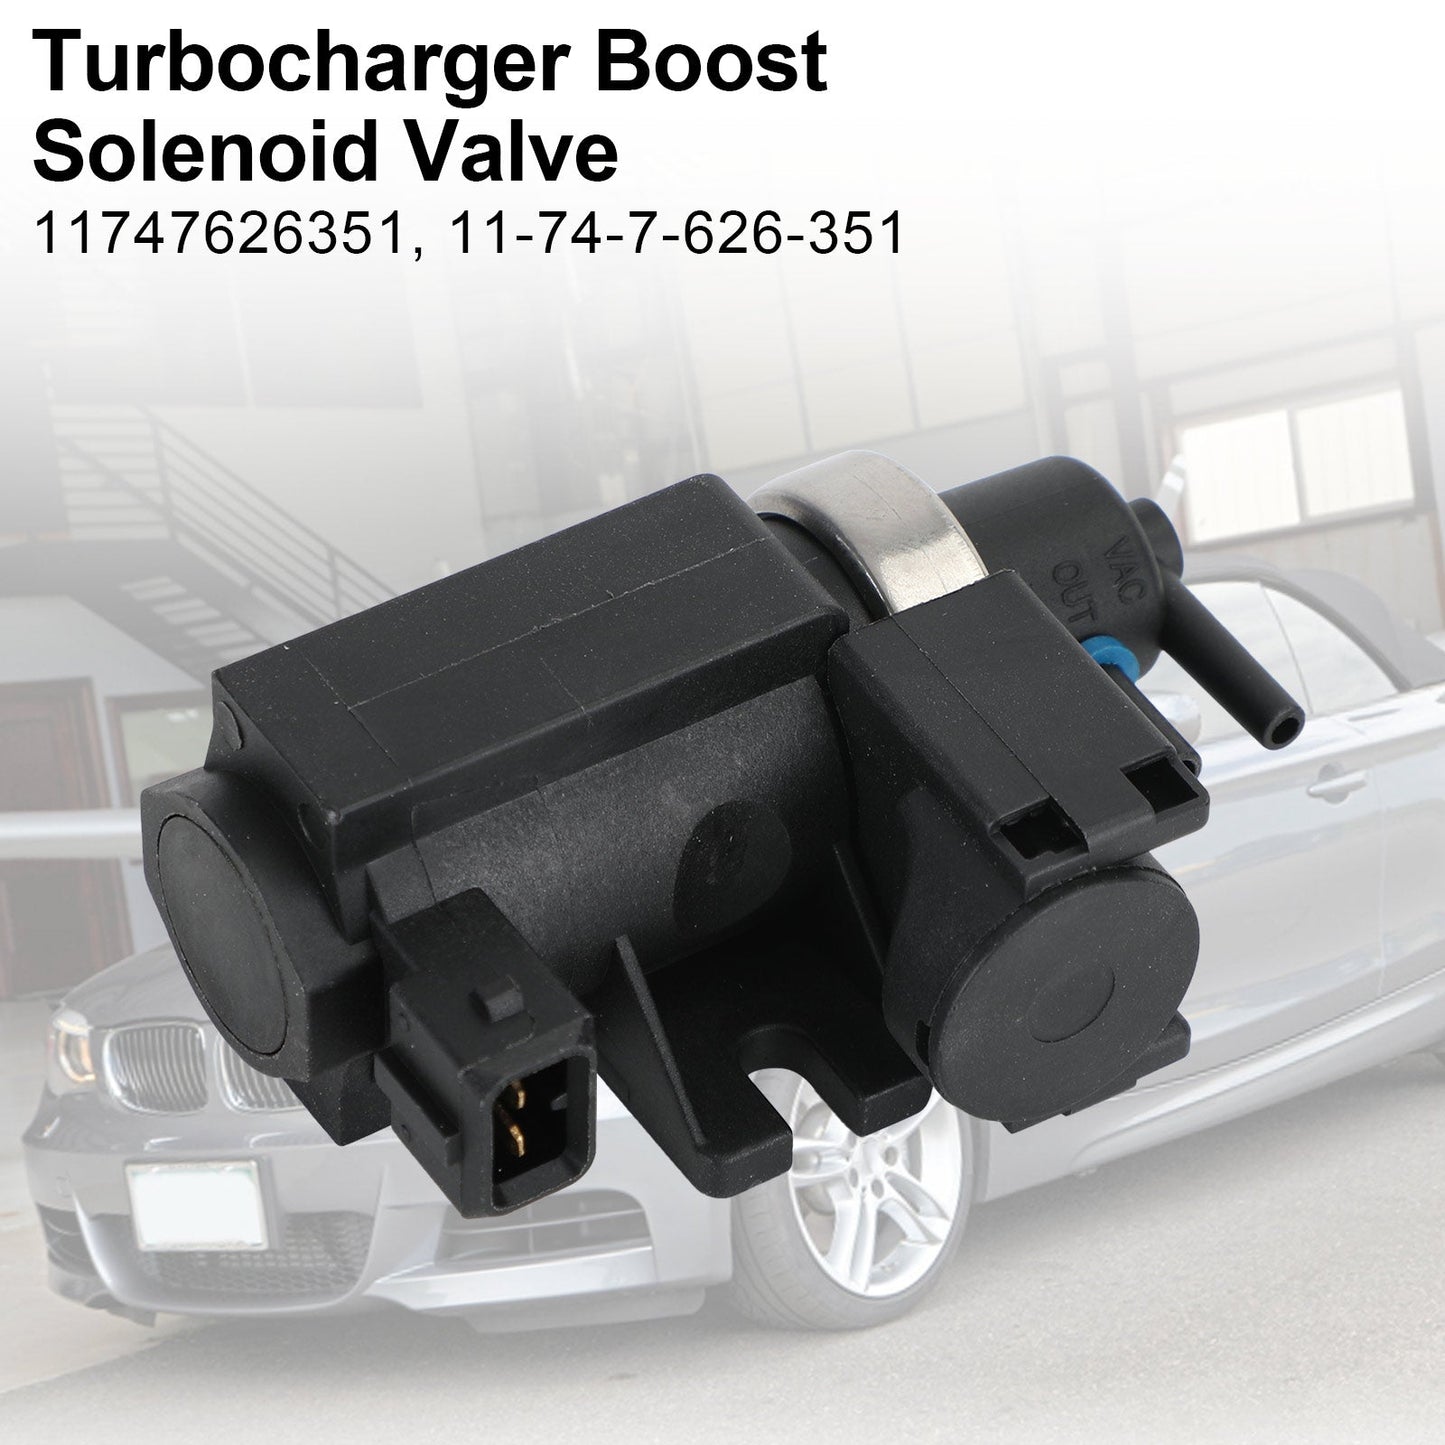 Turbocharger Boost Solenoid Valve for BMW 320i 328i 335i 428i X5 11747626351